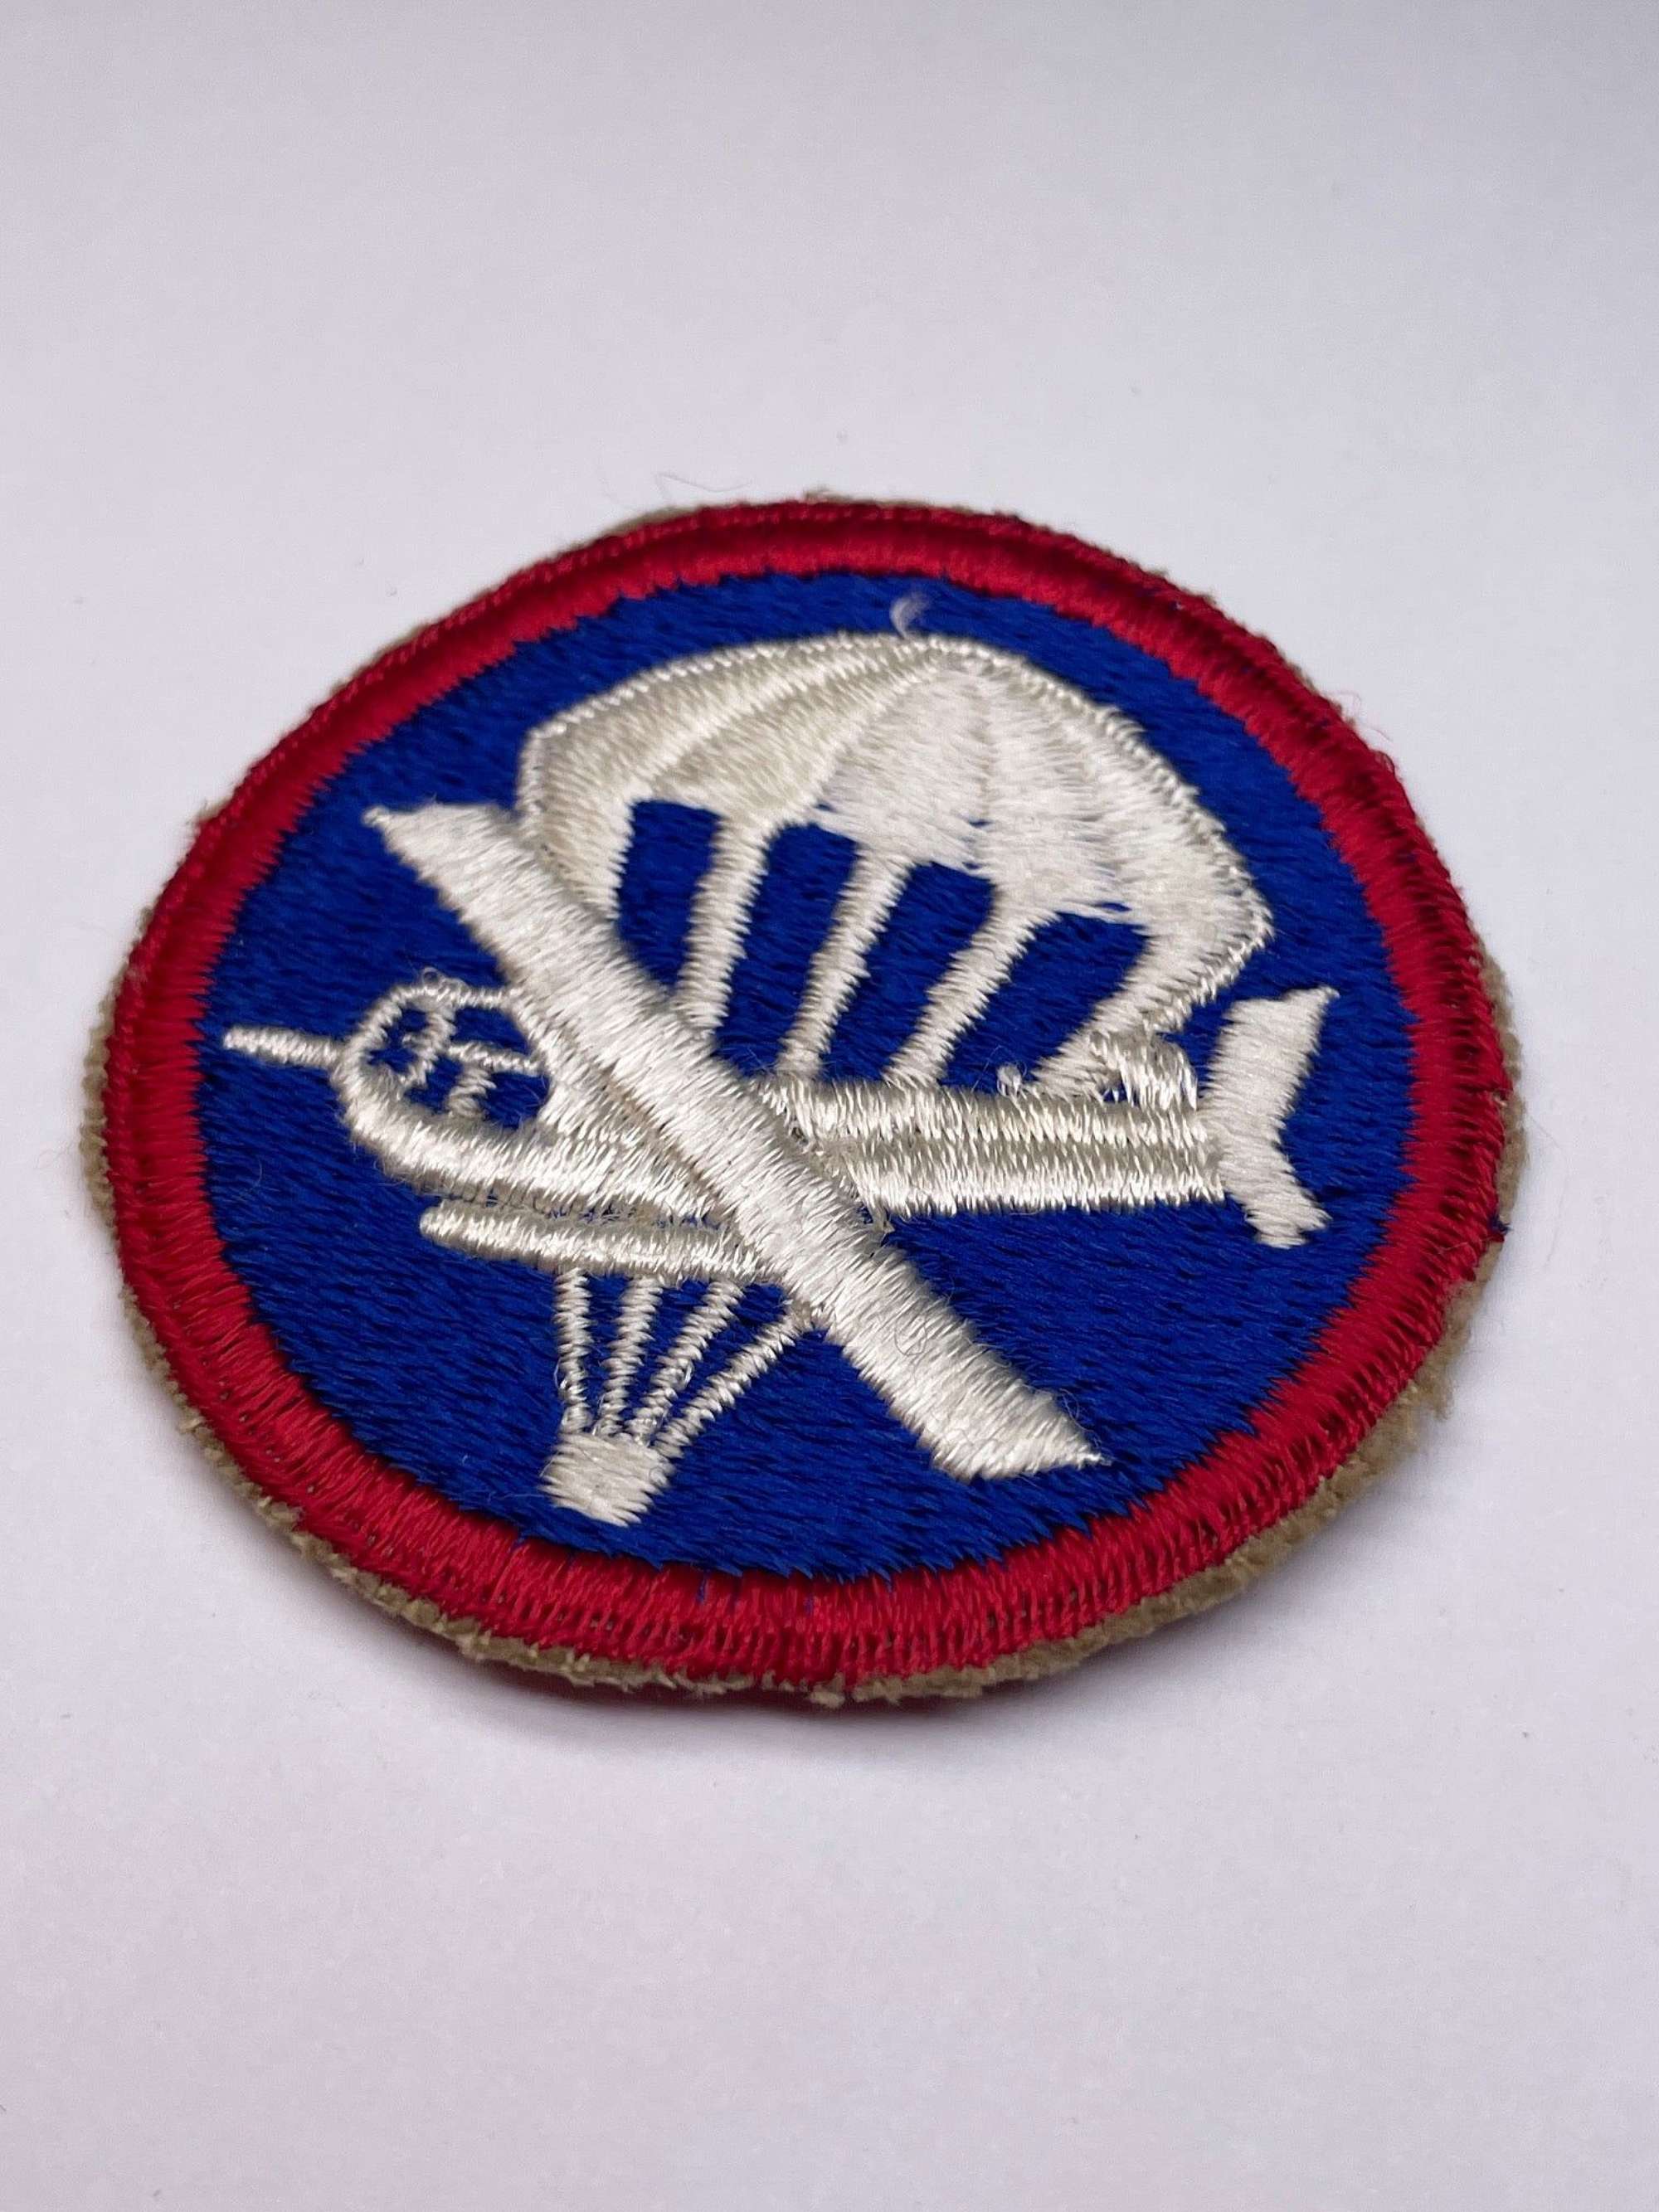 Original World War Two American Airborne Glider Cap Badge, Enlisted